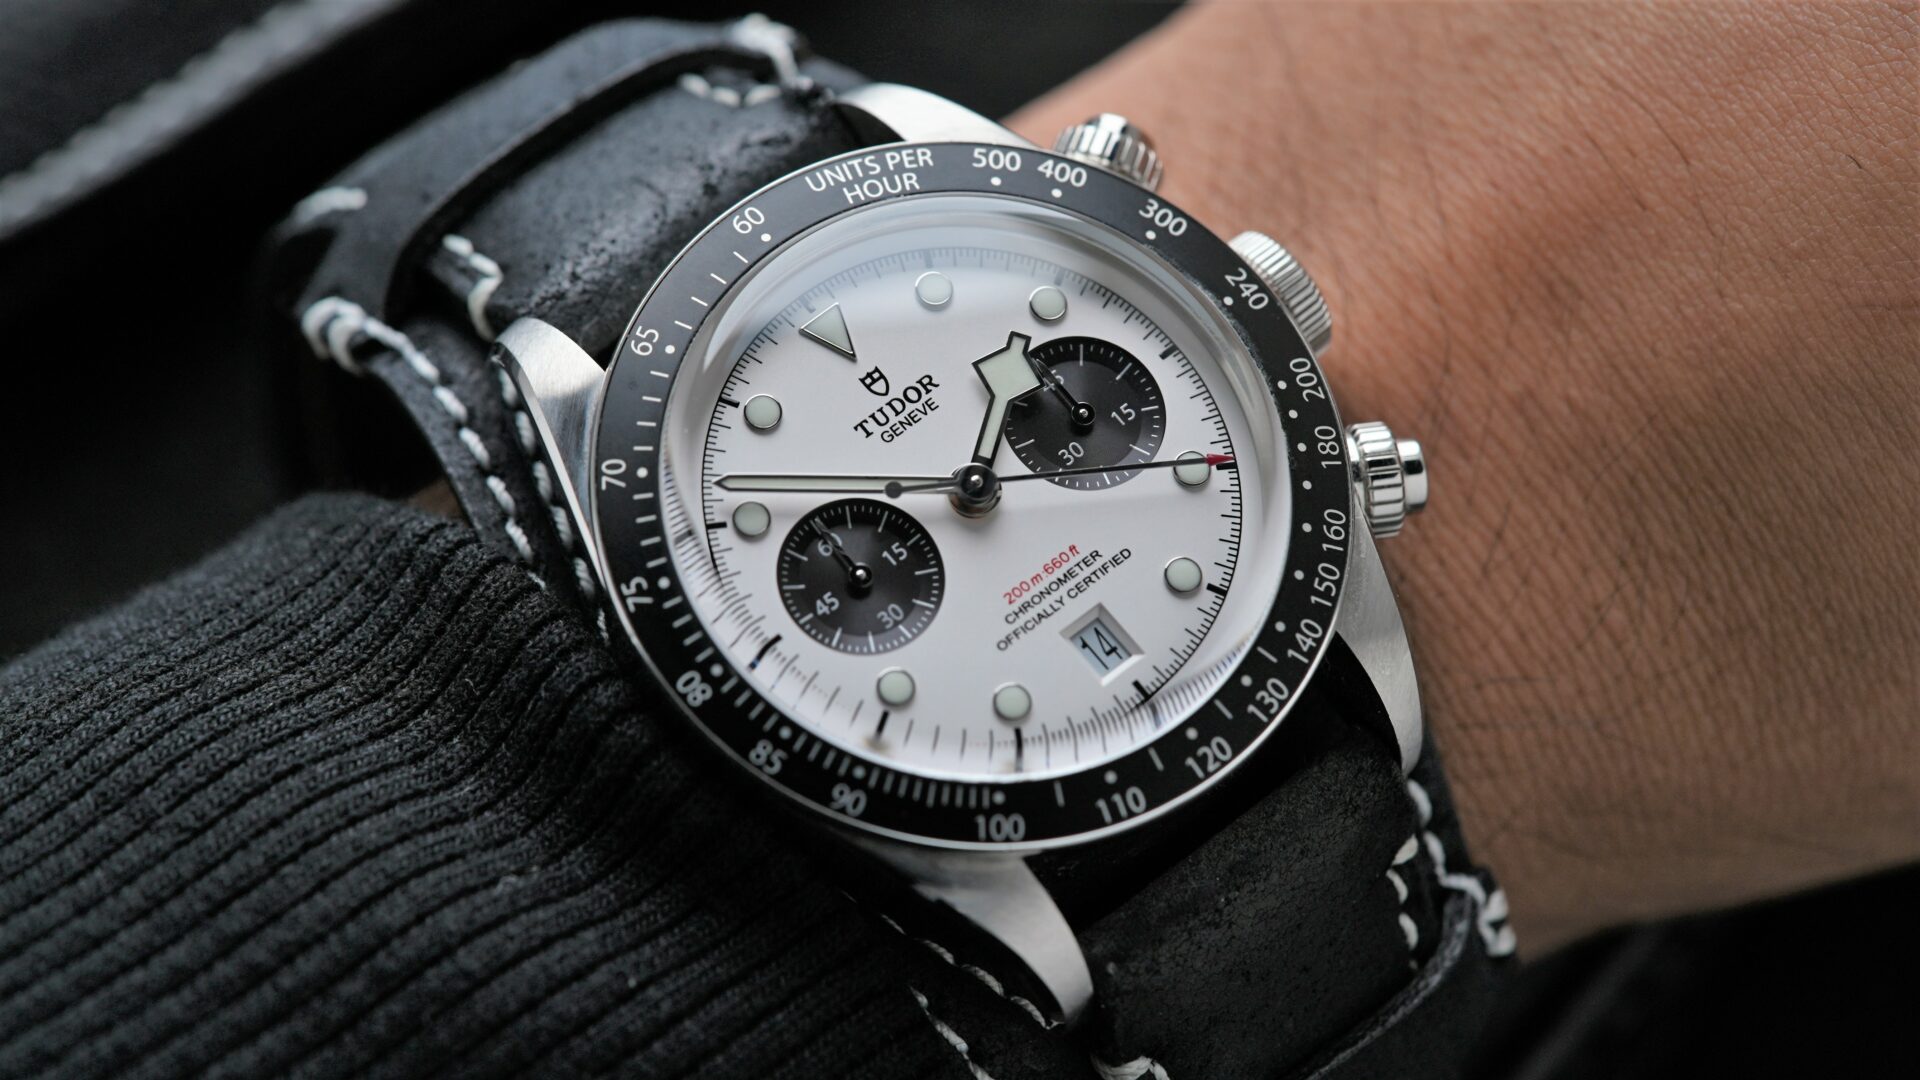 Tudor Black Bay Chrono Dial Chronograph 79360 M79360 Black Bay watch displayed on the wrist.